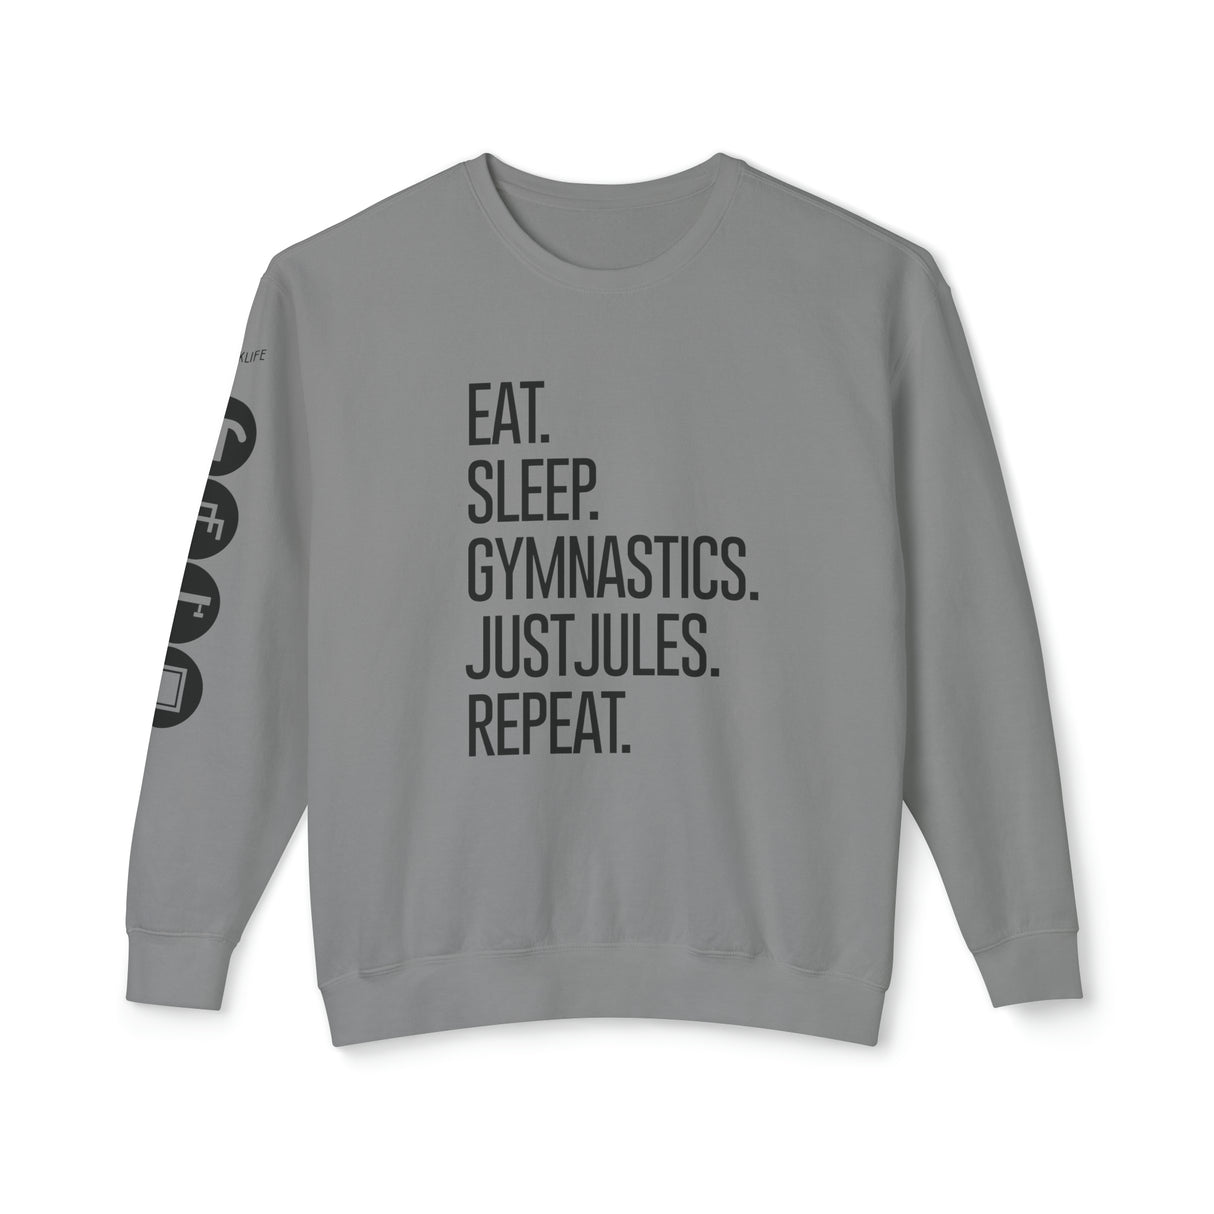 JustJules - Women's Gymnastics Events Sleeve - Lightweight Crewneck Sweatshirt